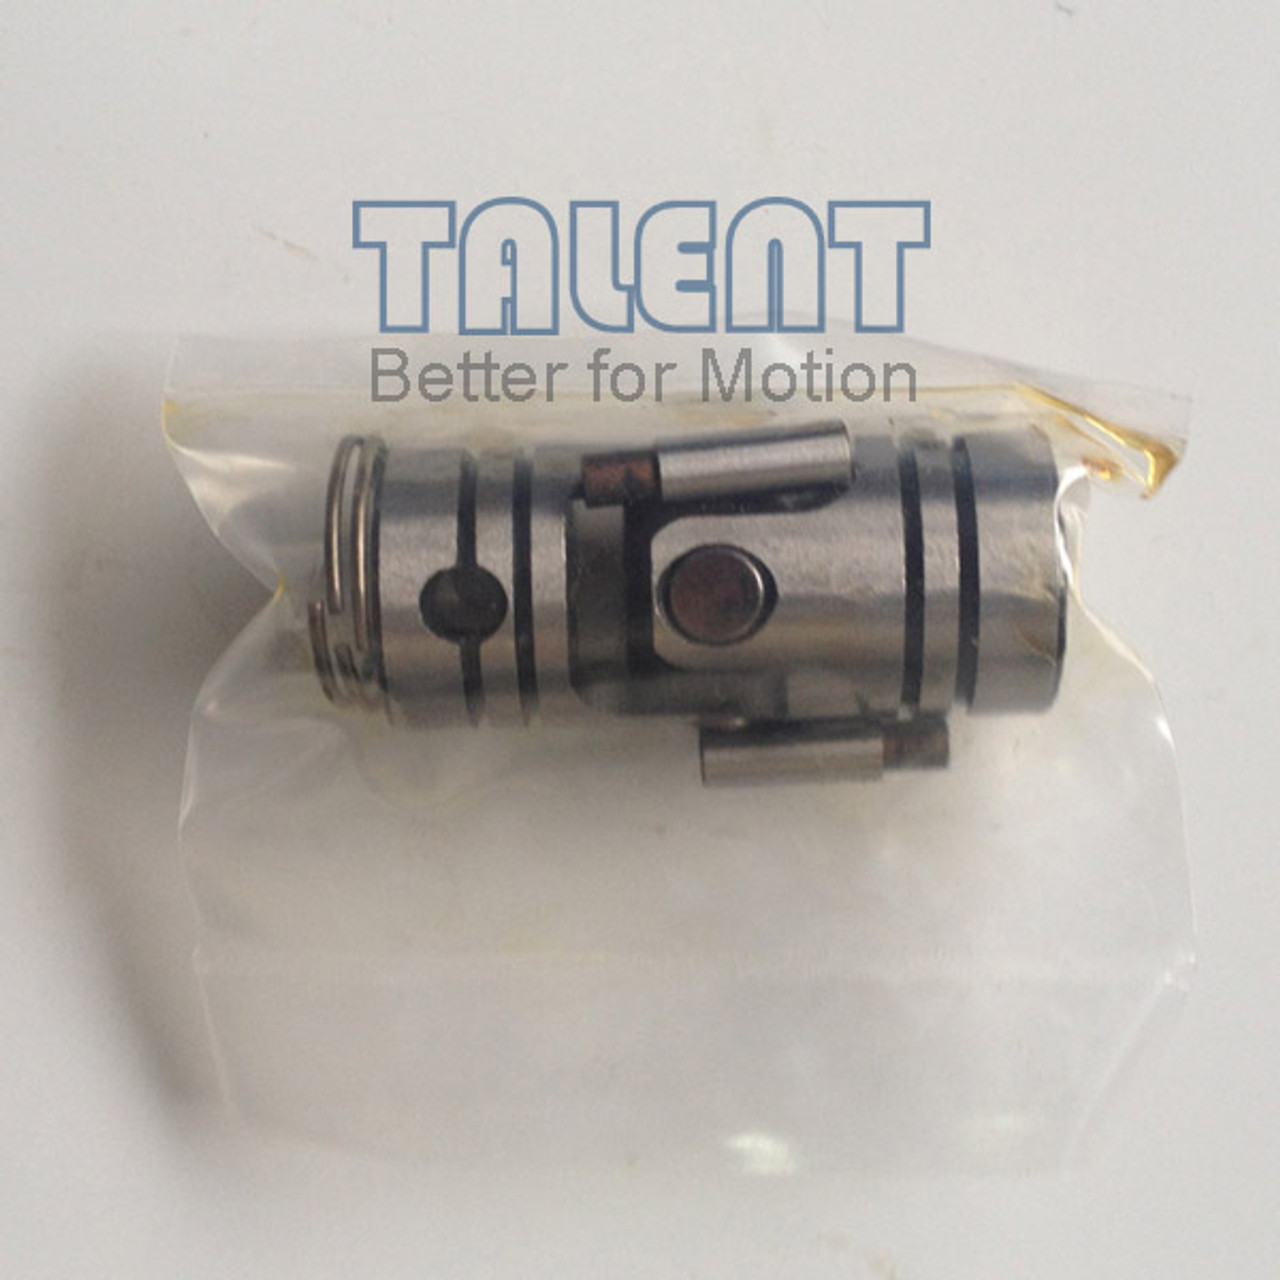 02WS mini universal joint, shaft bore 4x4, set pin attachment - Talent  Motion